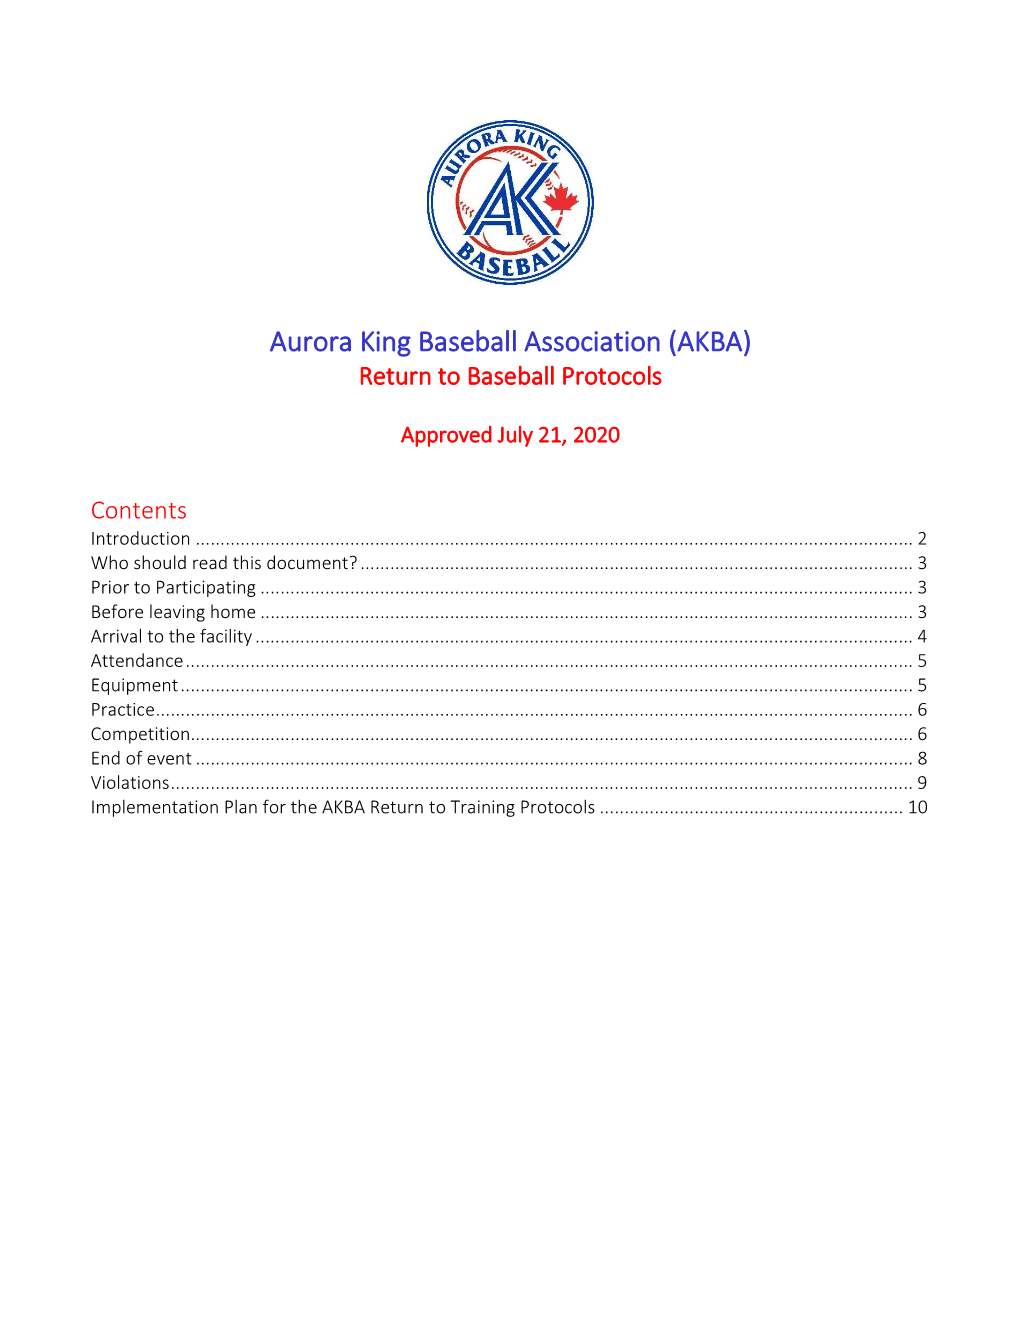 Aurora King Baseball Association (AKBA) Return to Baseball Protocols